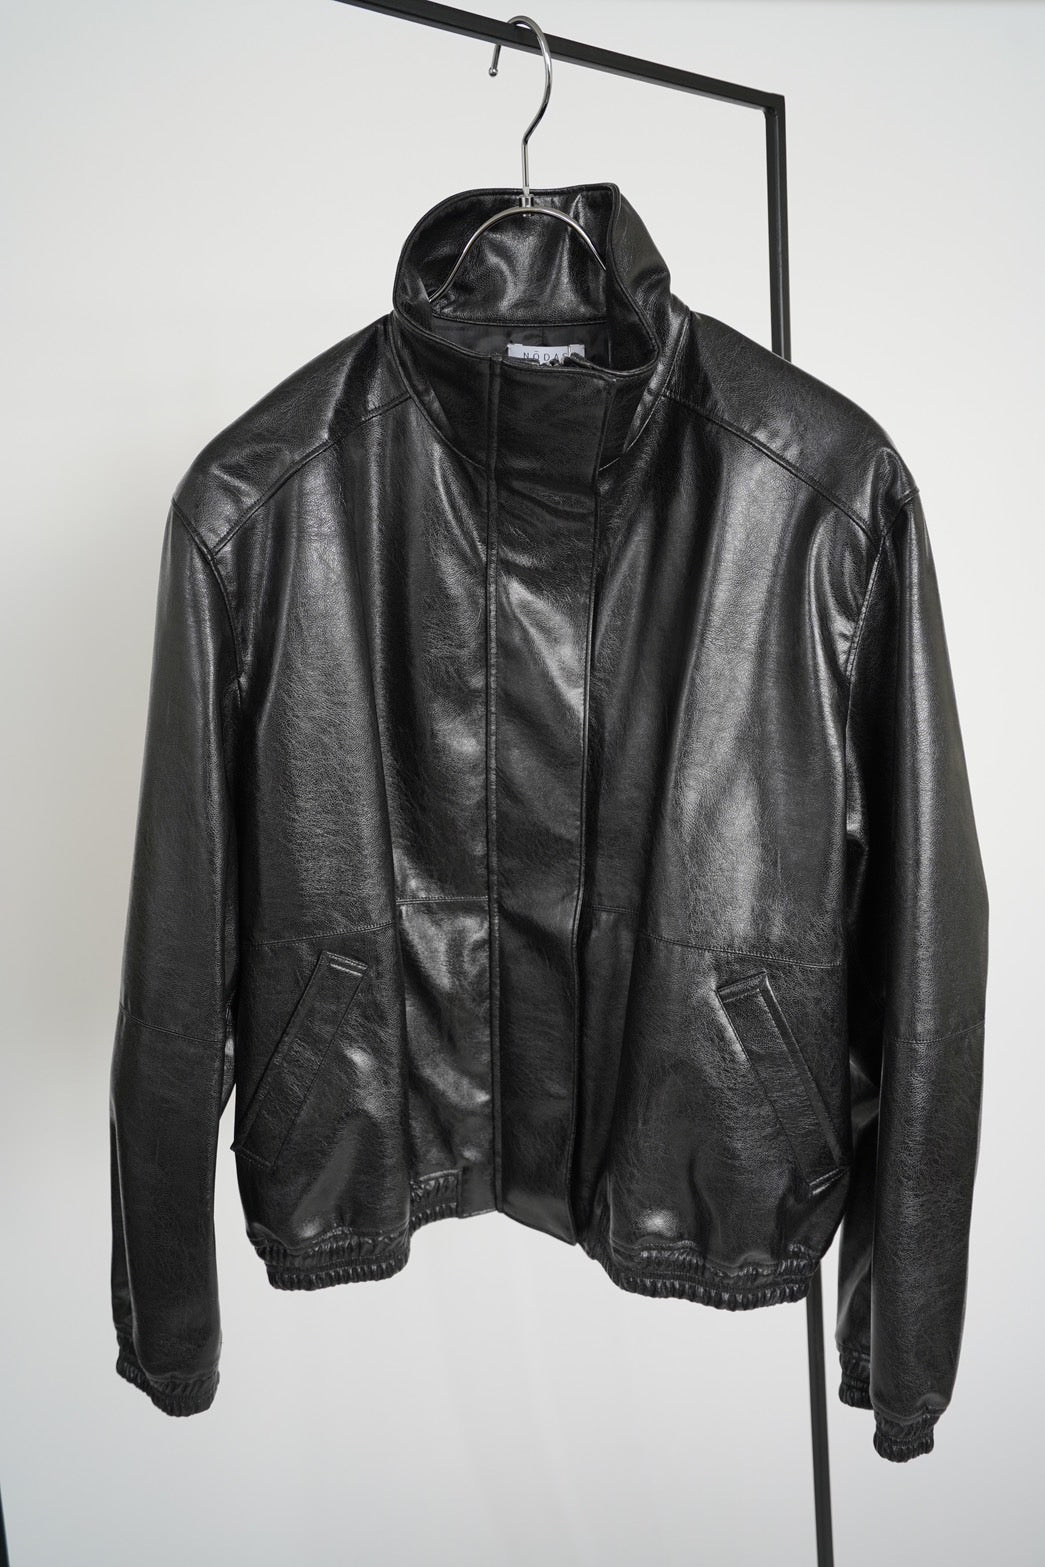 Fake leather short blouson - BLACK